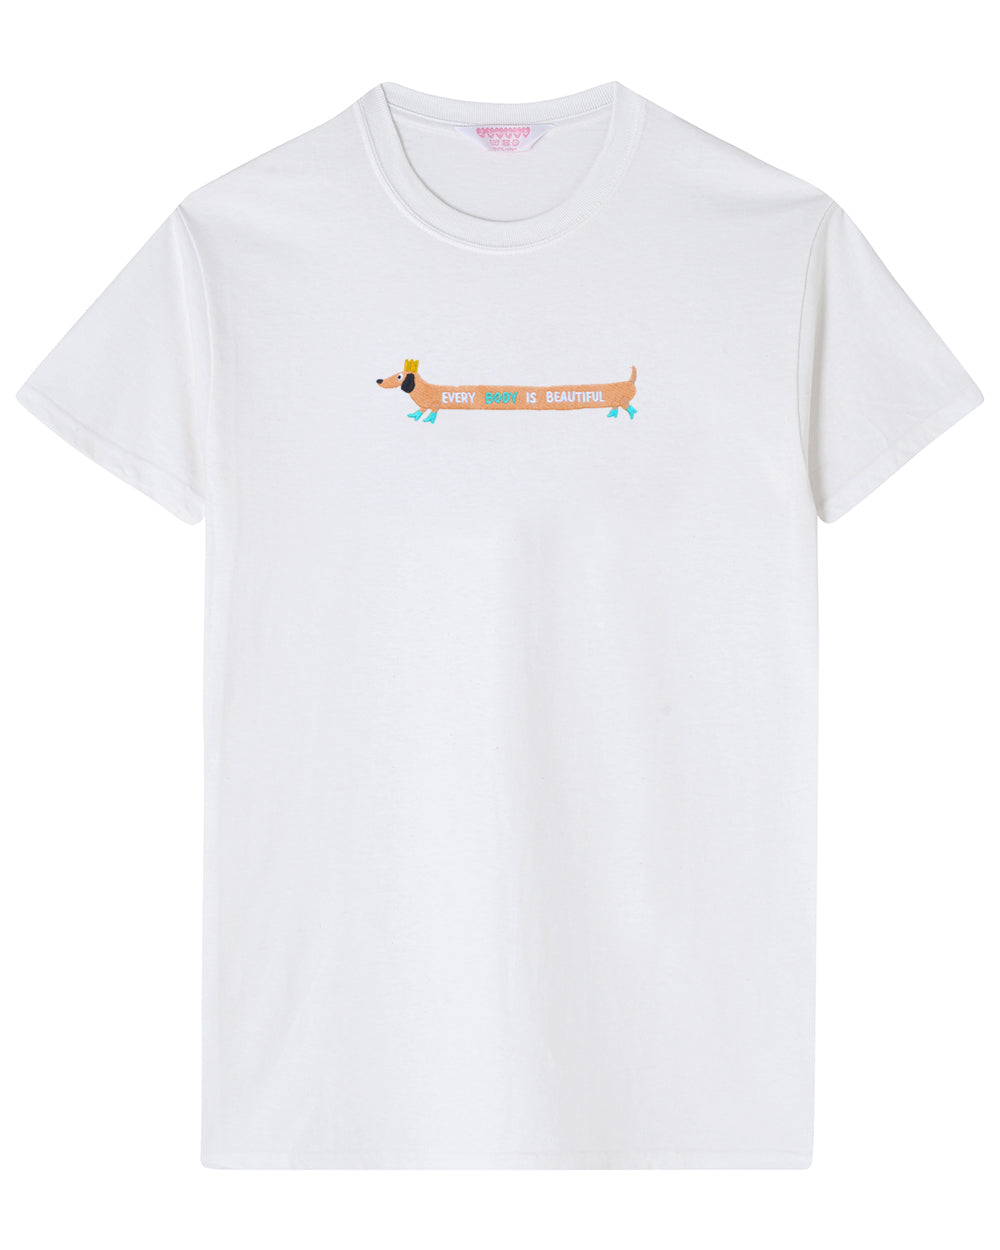 Sausage Dog Embroidered T-Shirt